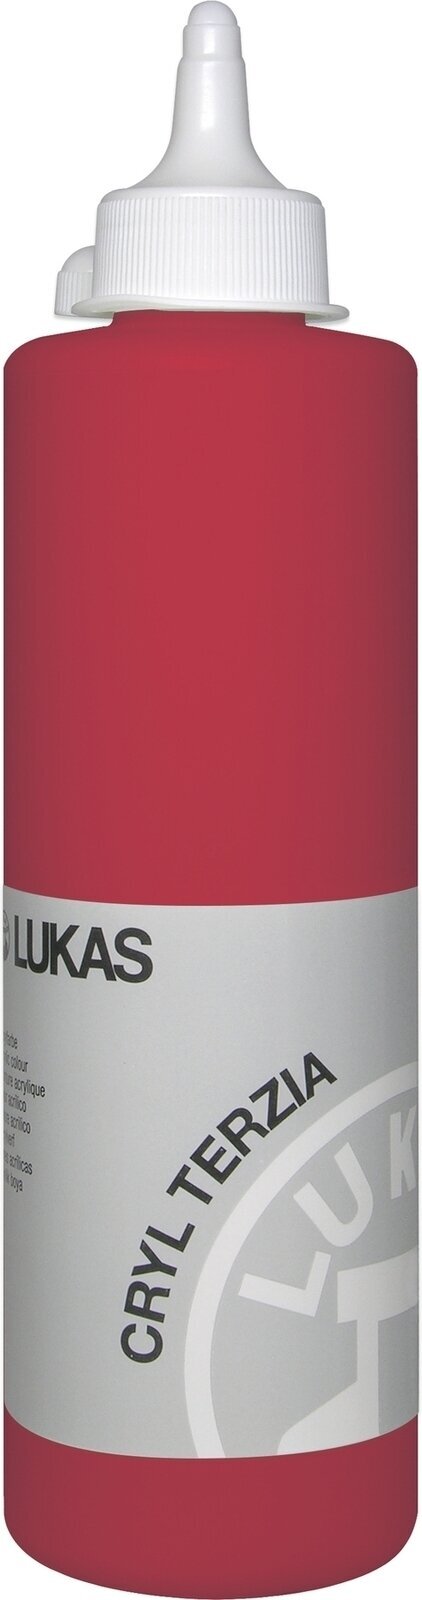 Acrylverf Lukas Cryl Terzia Acrylic Paint Plastic Bottle Acrylverf Cadmium Red Deep Hue 500 ml 1 stuk